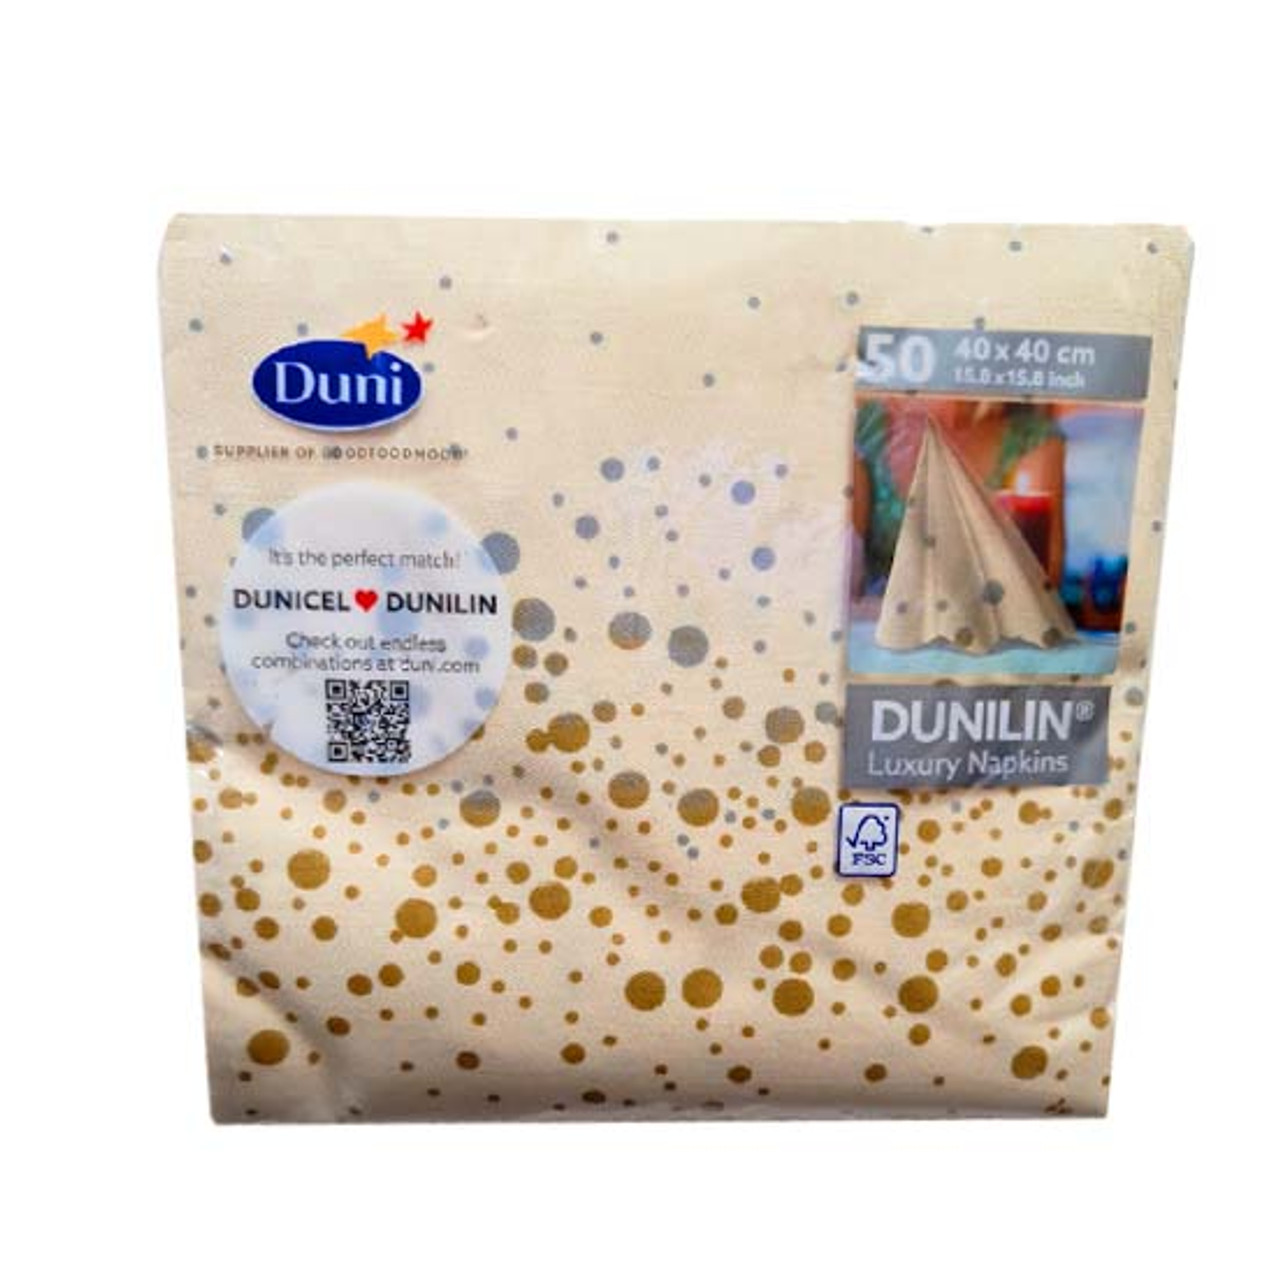 Dunilin 'new year cream' napkin 40 x 40cm 3ply